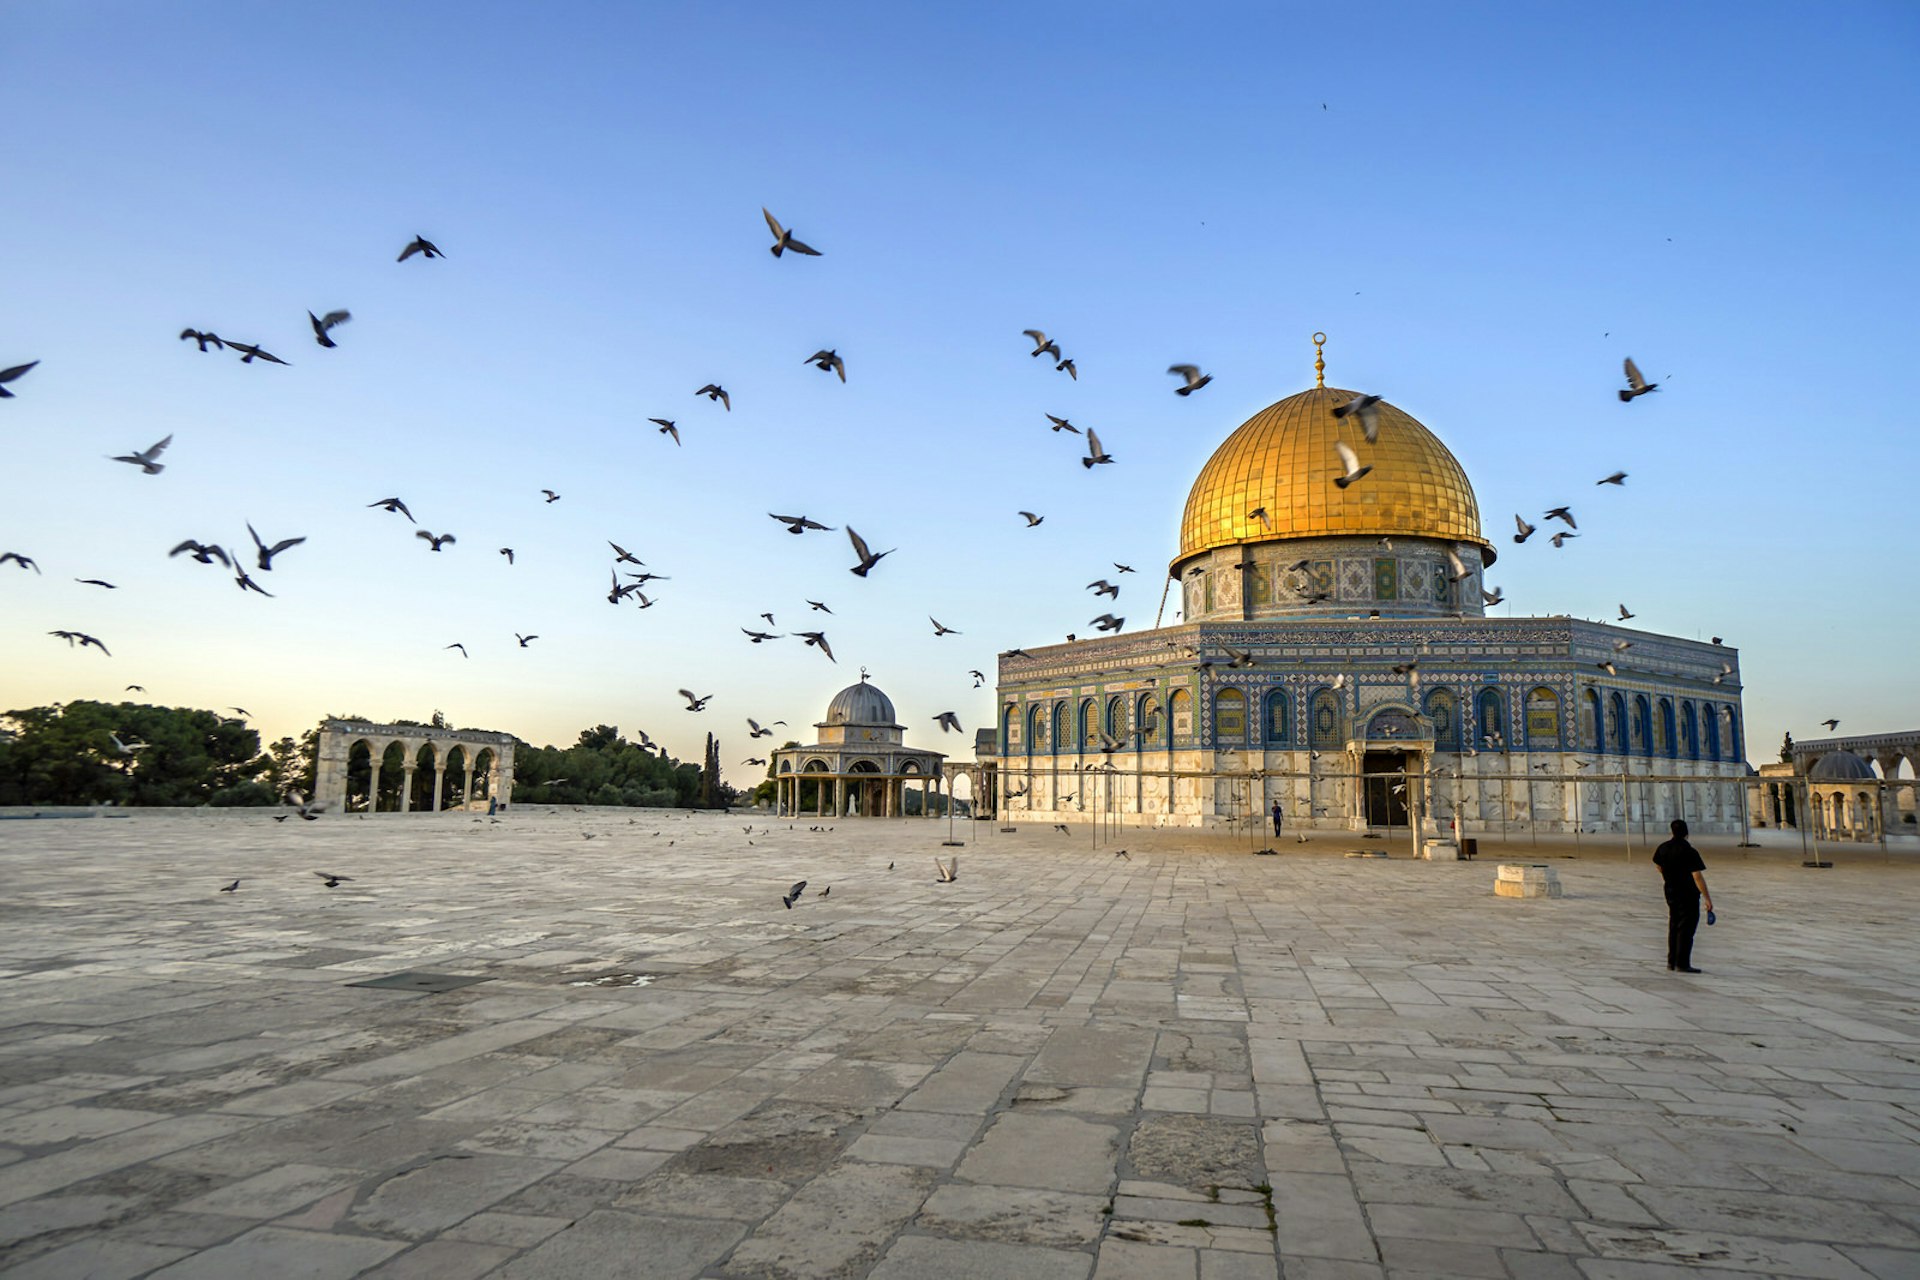 Jerusalem's iconic Dome of the Rock © hikrcn / Shutterstock